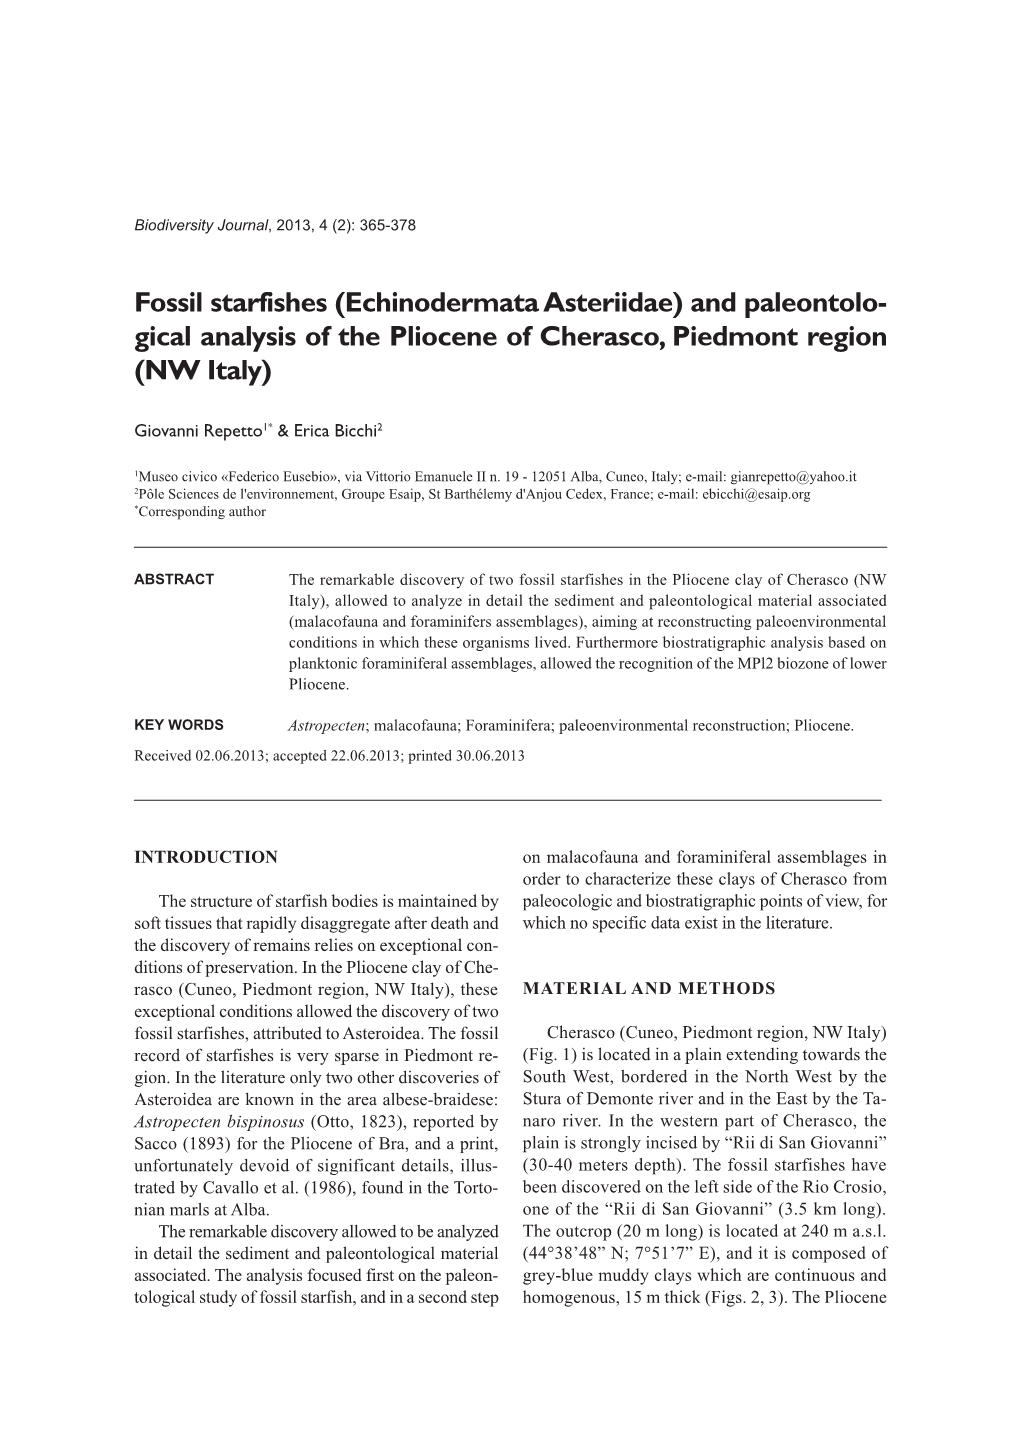 Echinodermata Asteriidae) and Paleontolo- Gical Analysis of the Pliocene of Cherasco, Piedmont Region (NW Italy)